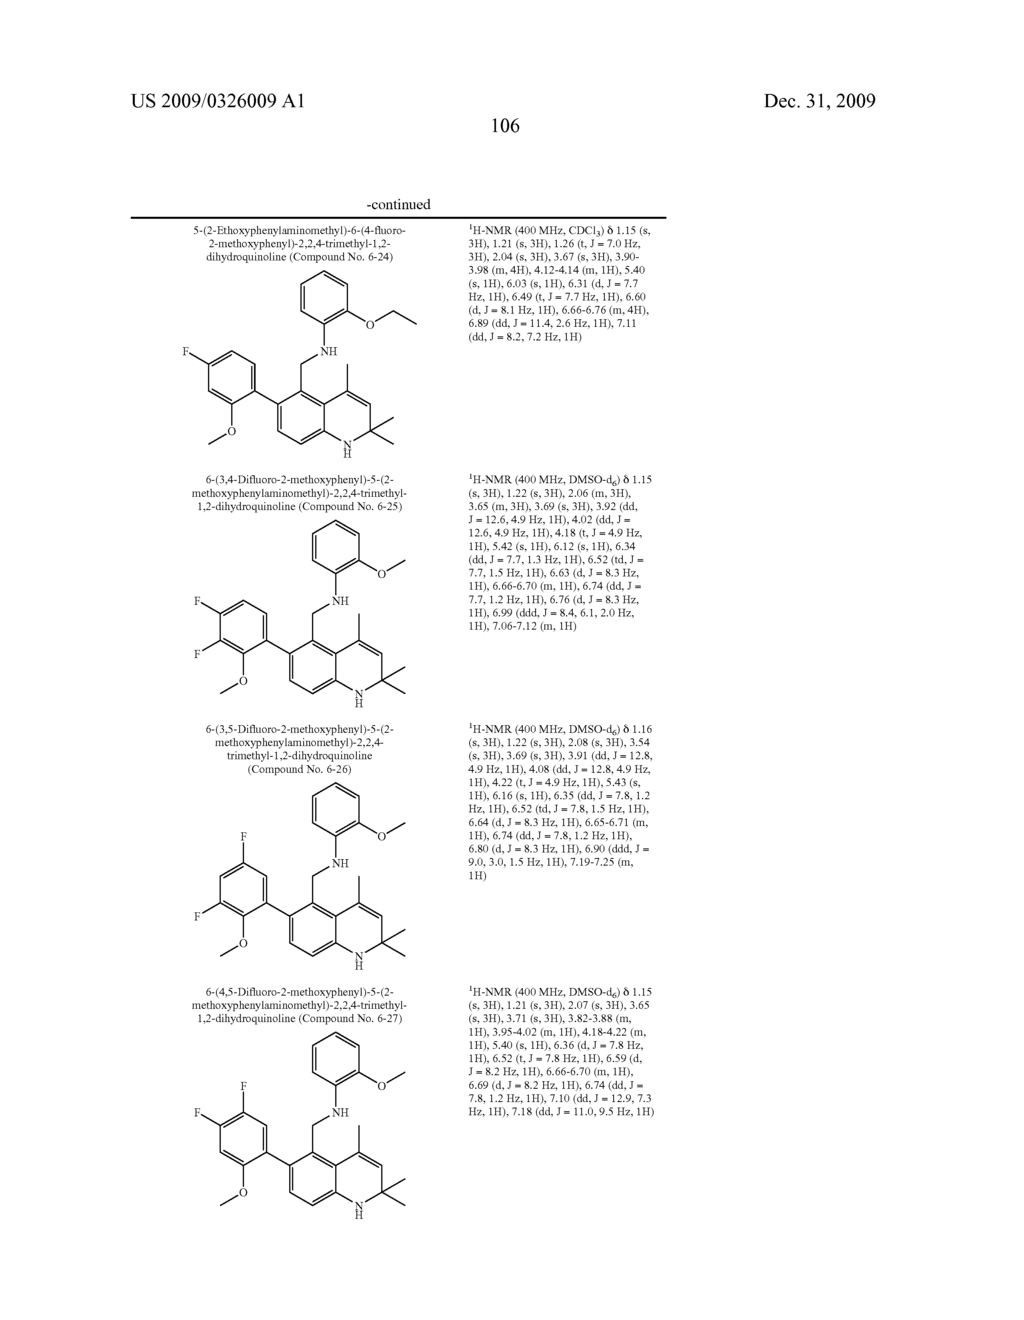 Novel 1-2-Dihydroquinoline Derivative Having Glucocorticoid Receptor Binding Activity - diagram, schematic, and image 107